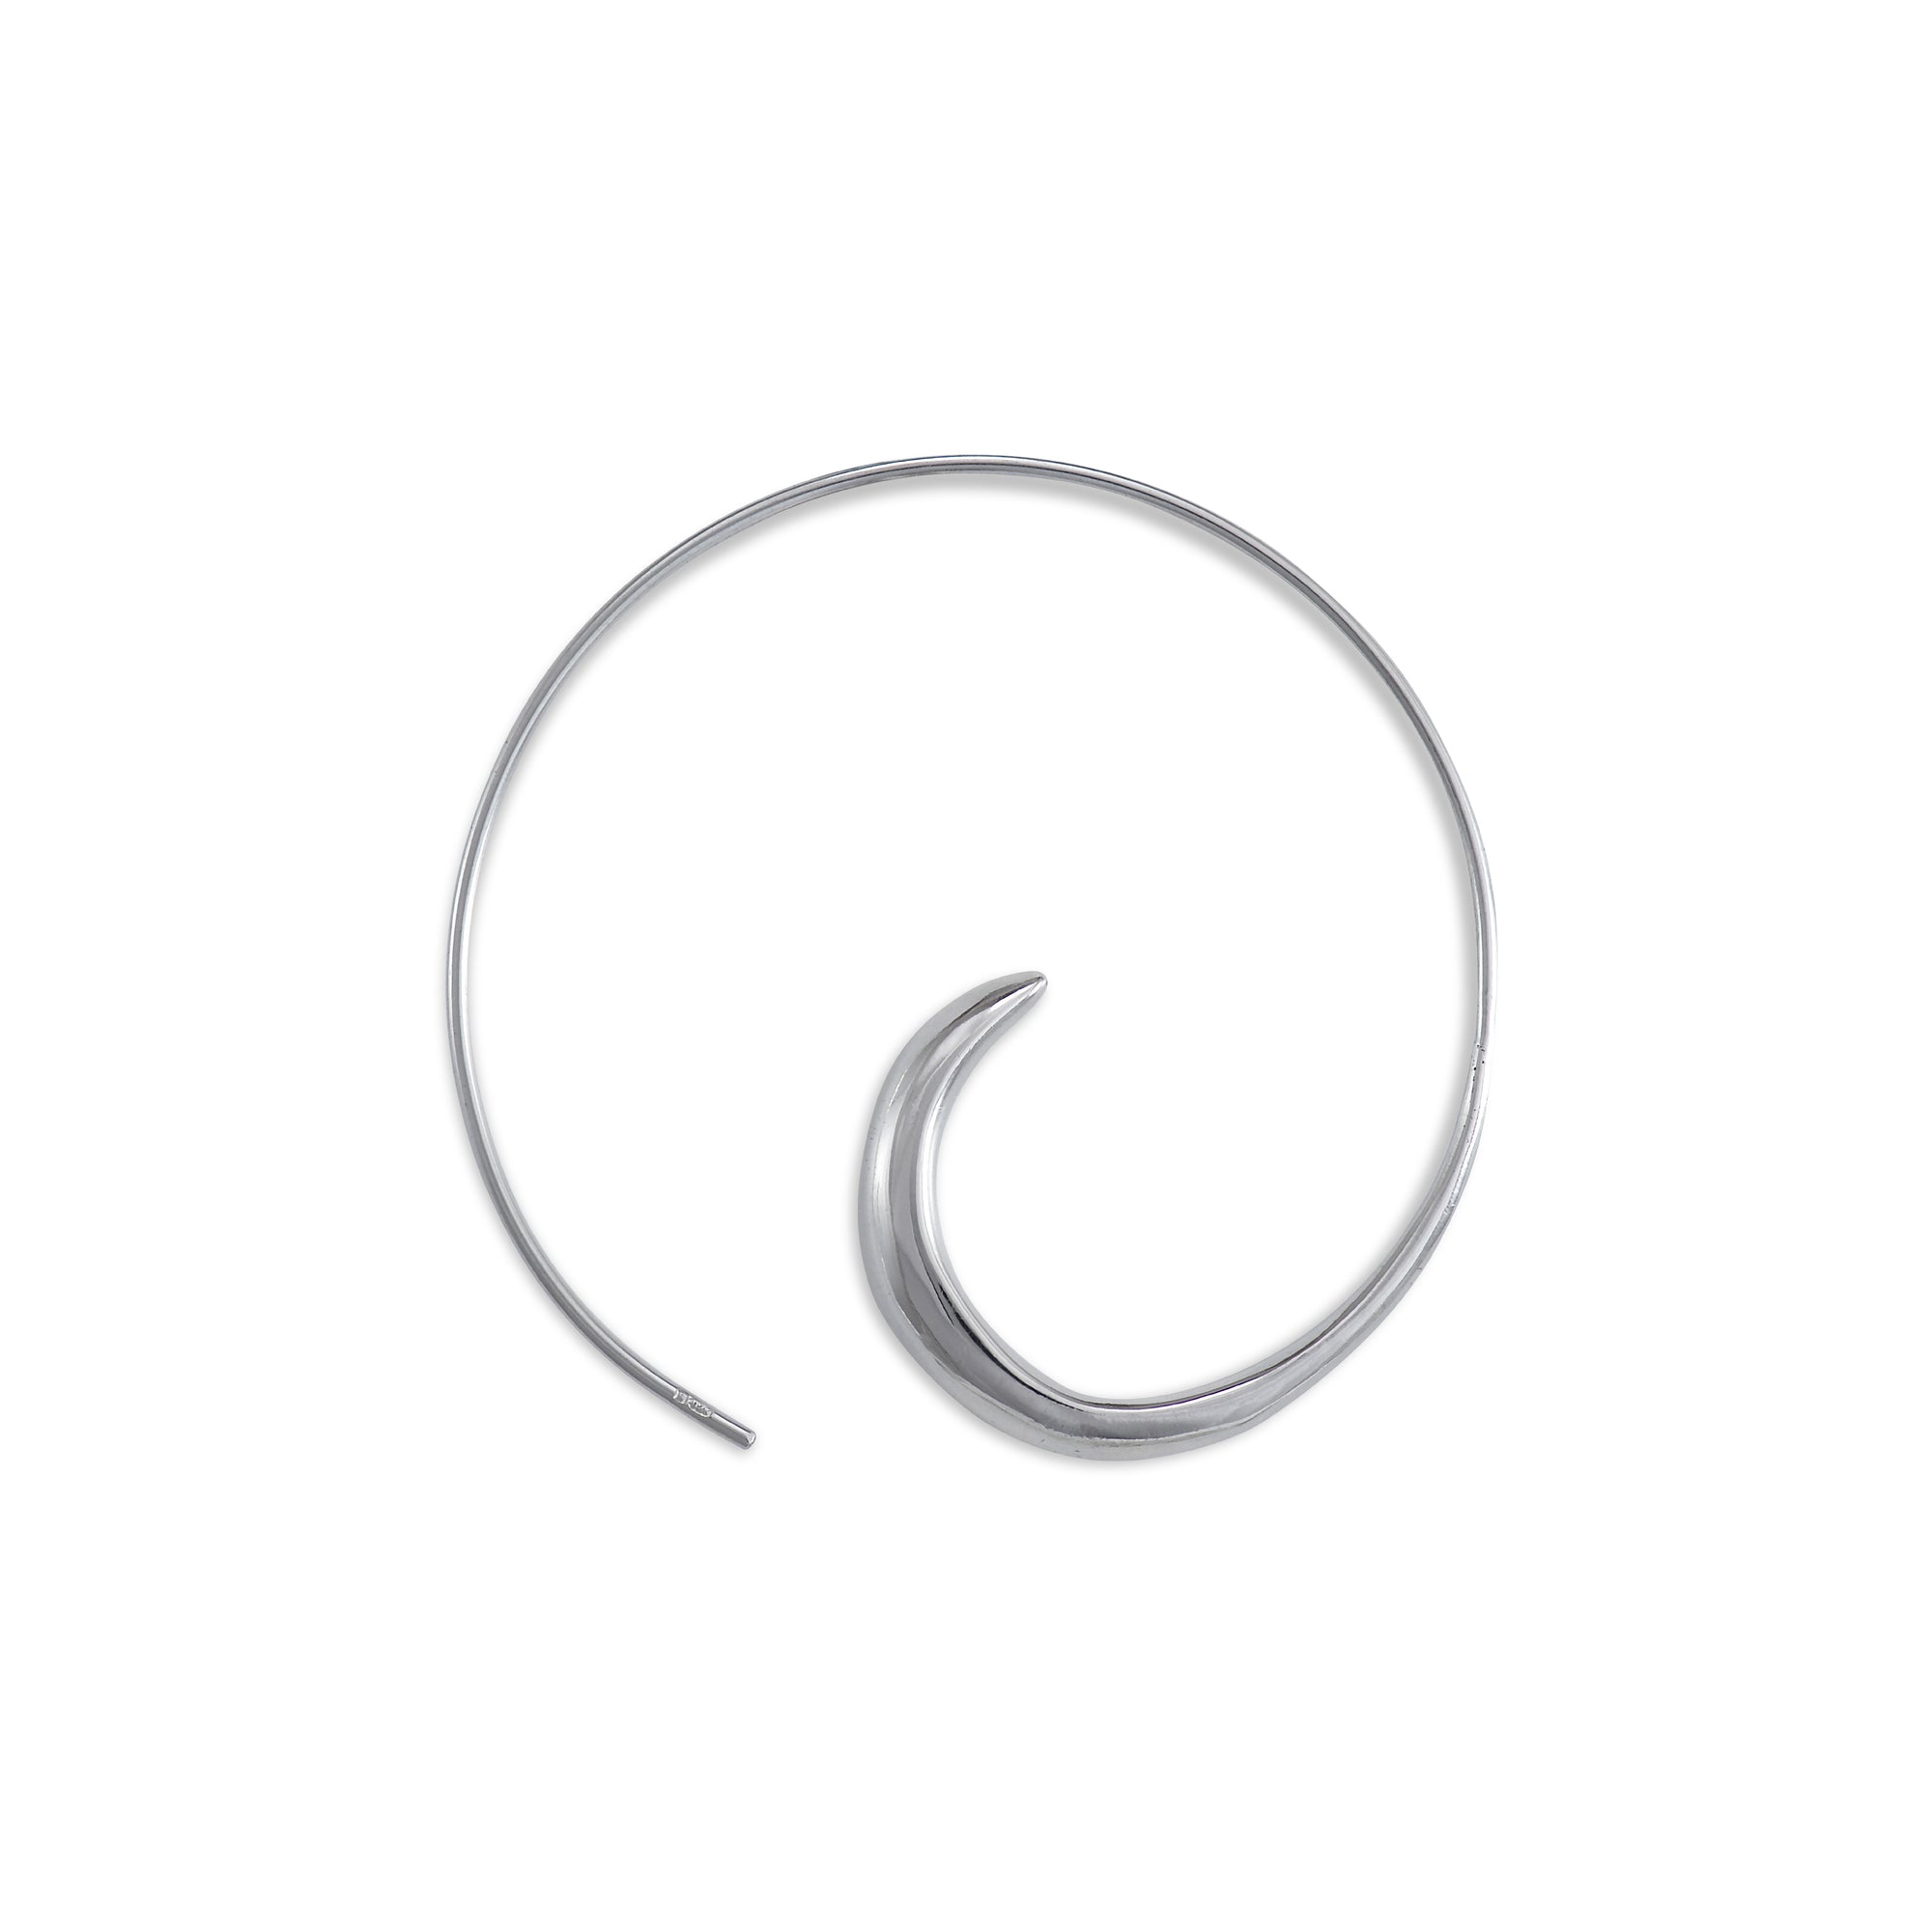 Small Plain Silver Spiral Earrings